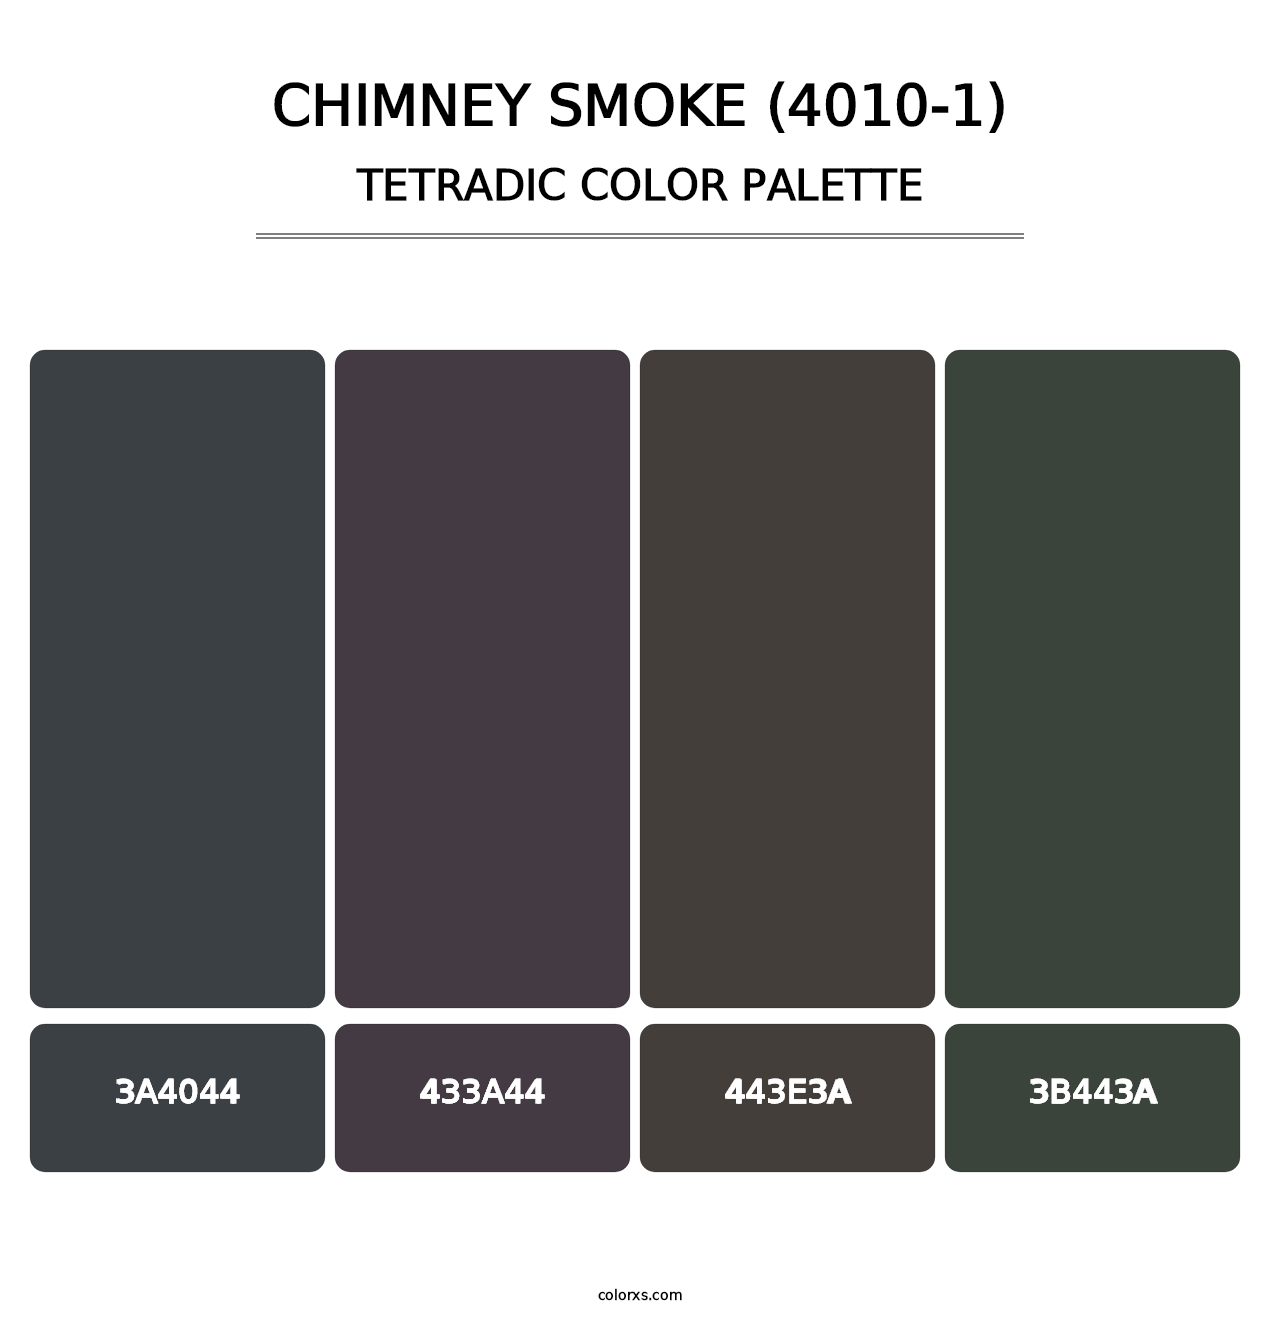 Chimney Smoke (4010-1) - Tetradic Color Palette